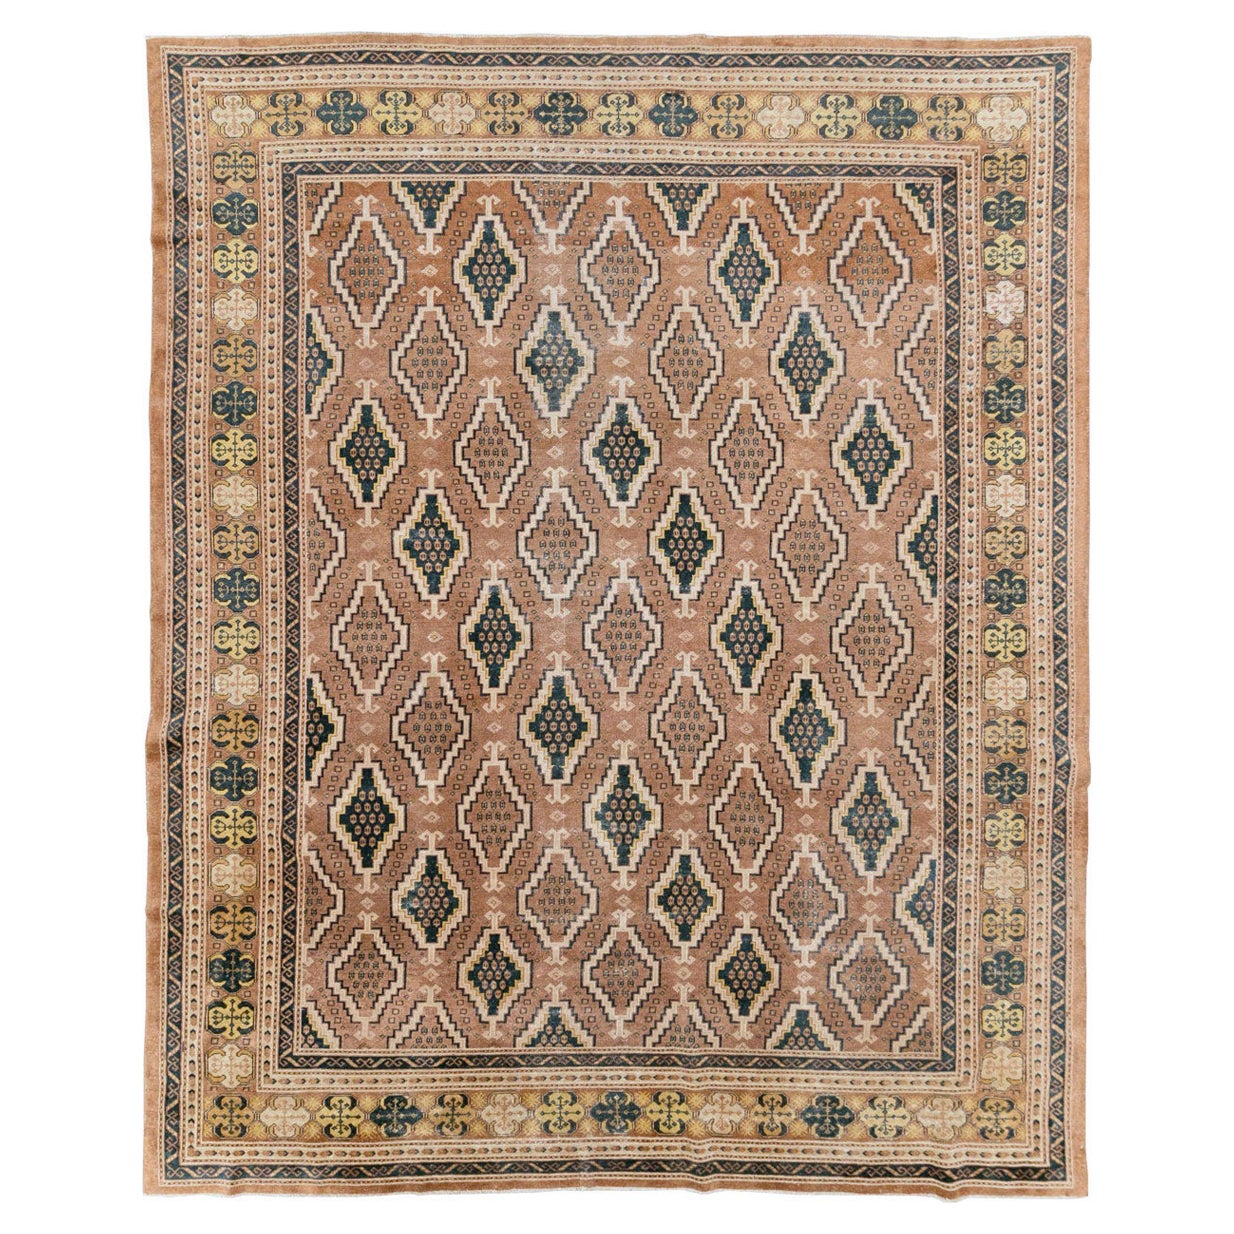 Early 20th Century Handmade Central Asian Samarkand Room Size Carpet